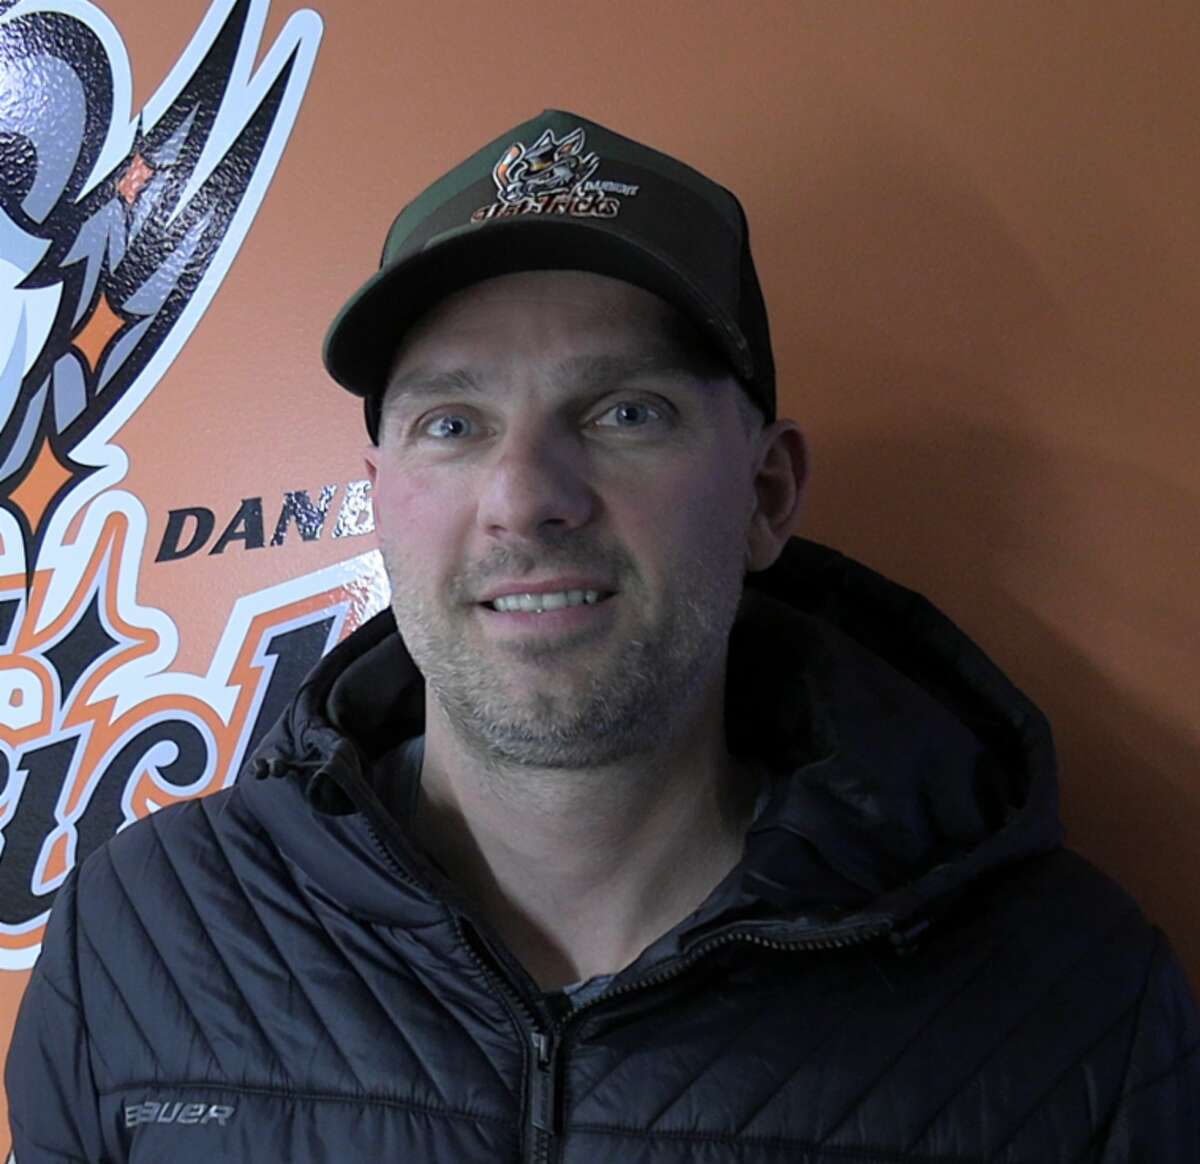 Danbury Hat Tricks Coach Seeks Pro Fighter for Hockey Team